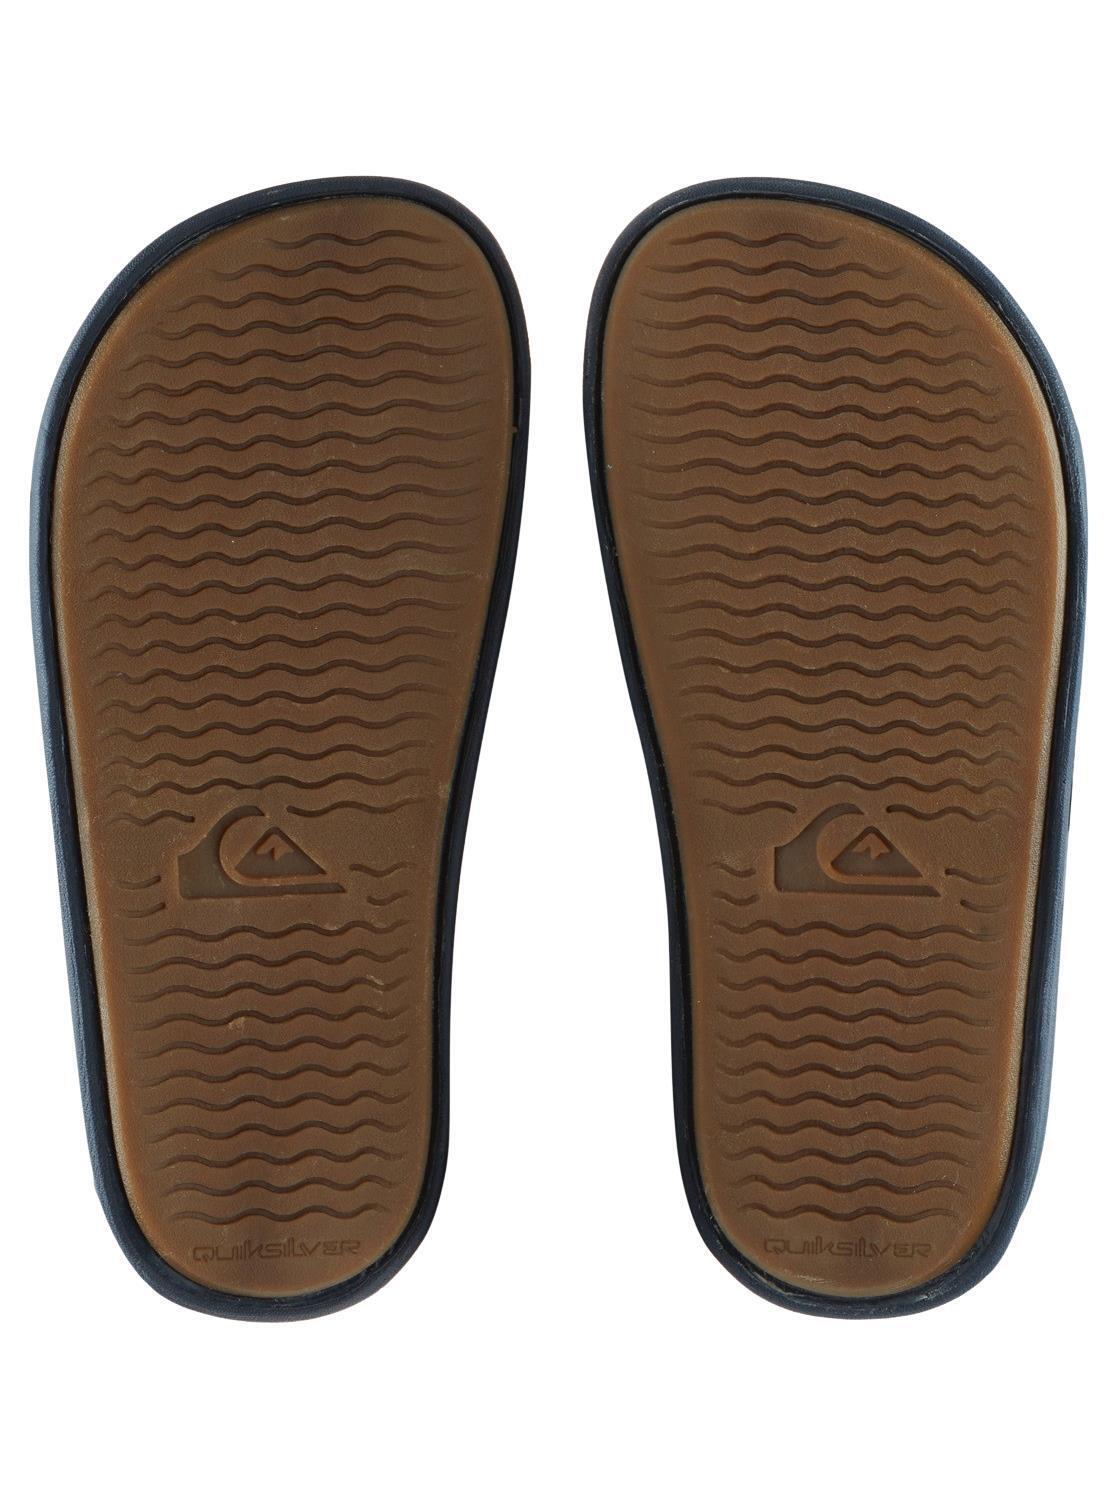 Quiksilver Rivi Wordmark Navy Slip On Slider Sandals